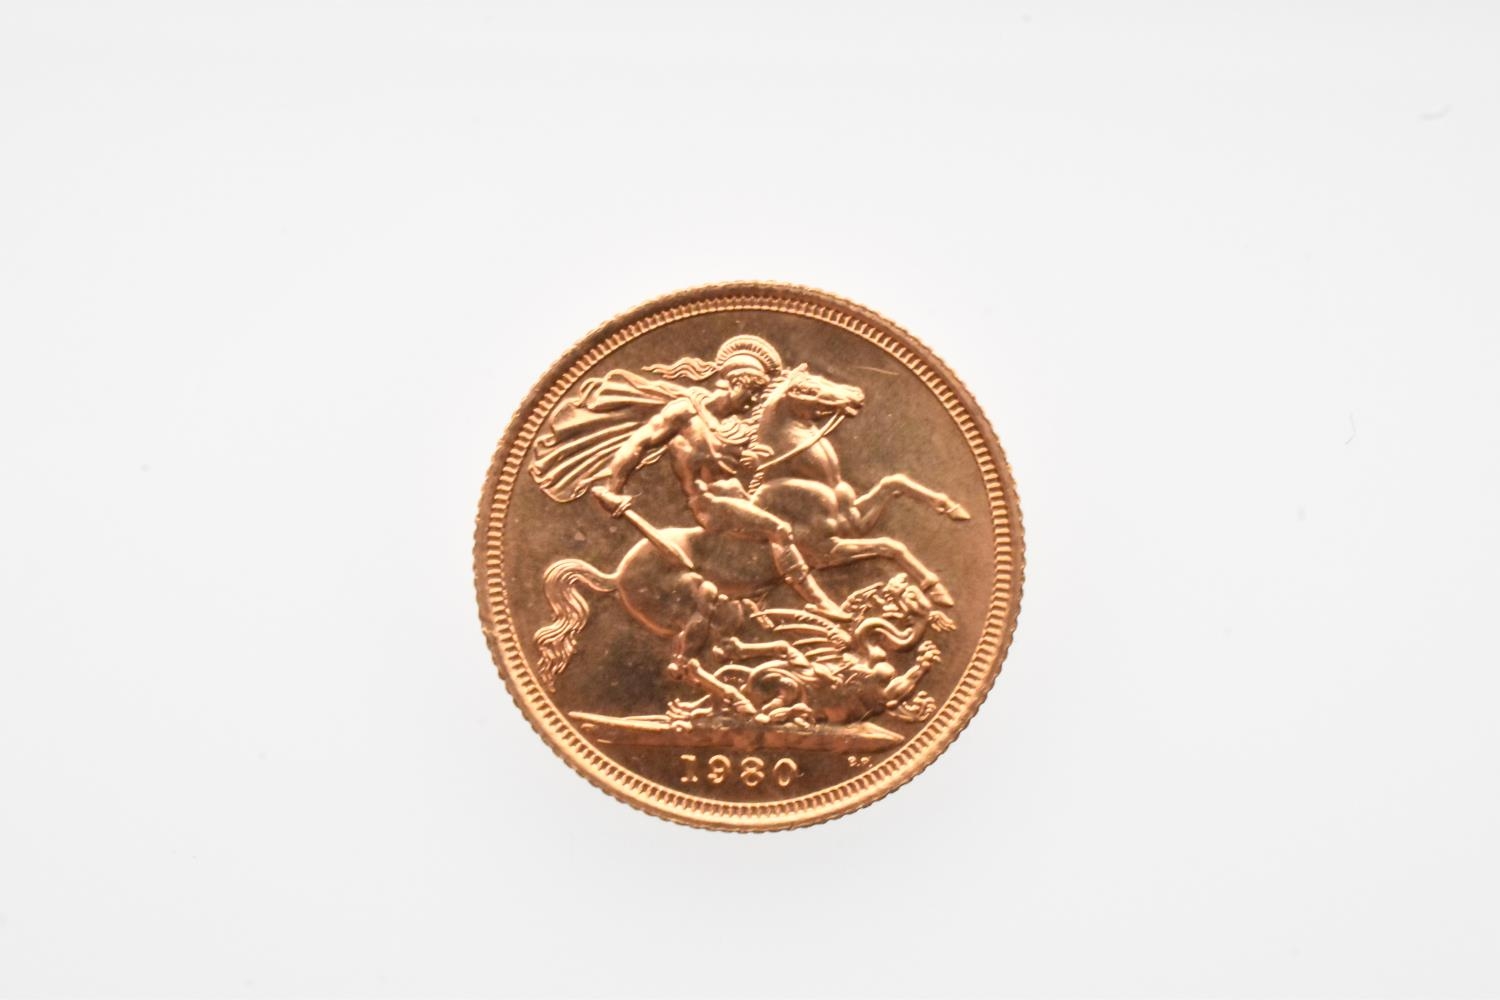 United Kingdom - Elizabeth II (1952-2022), Gold Sovereign, dated 1980,